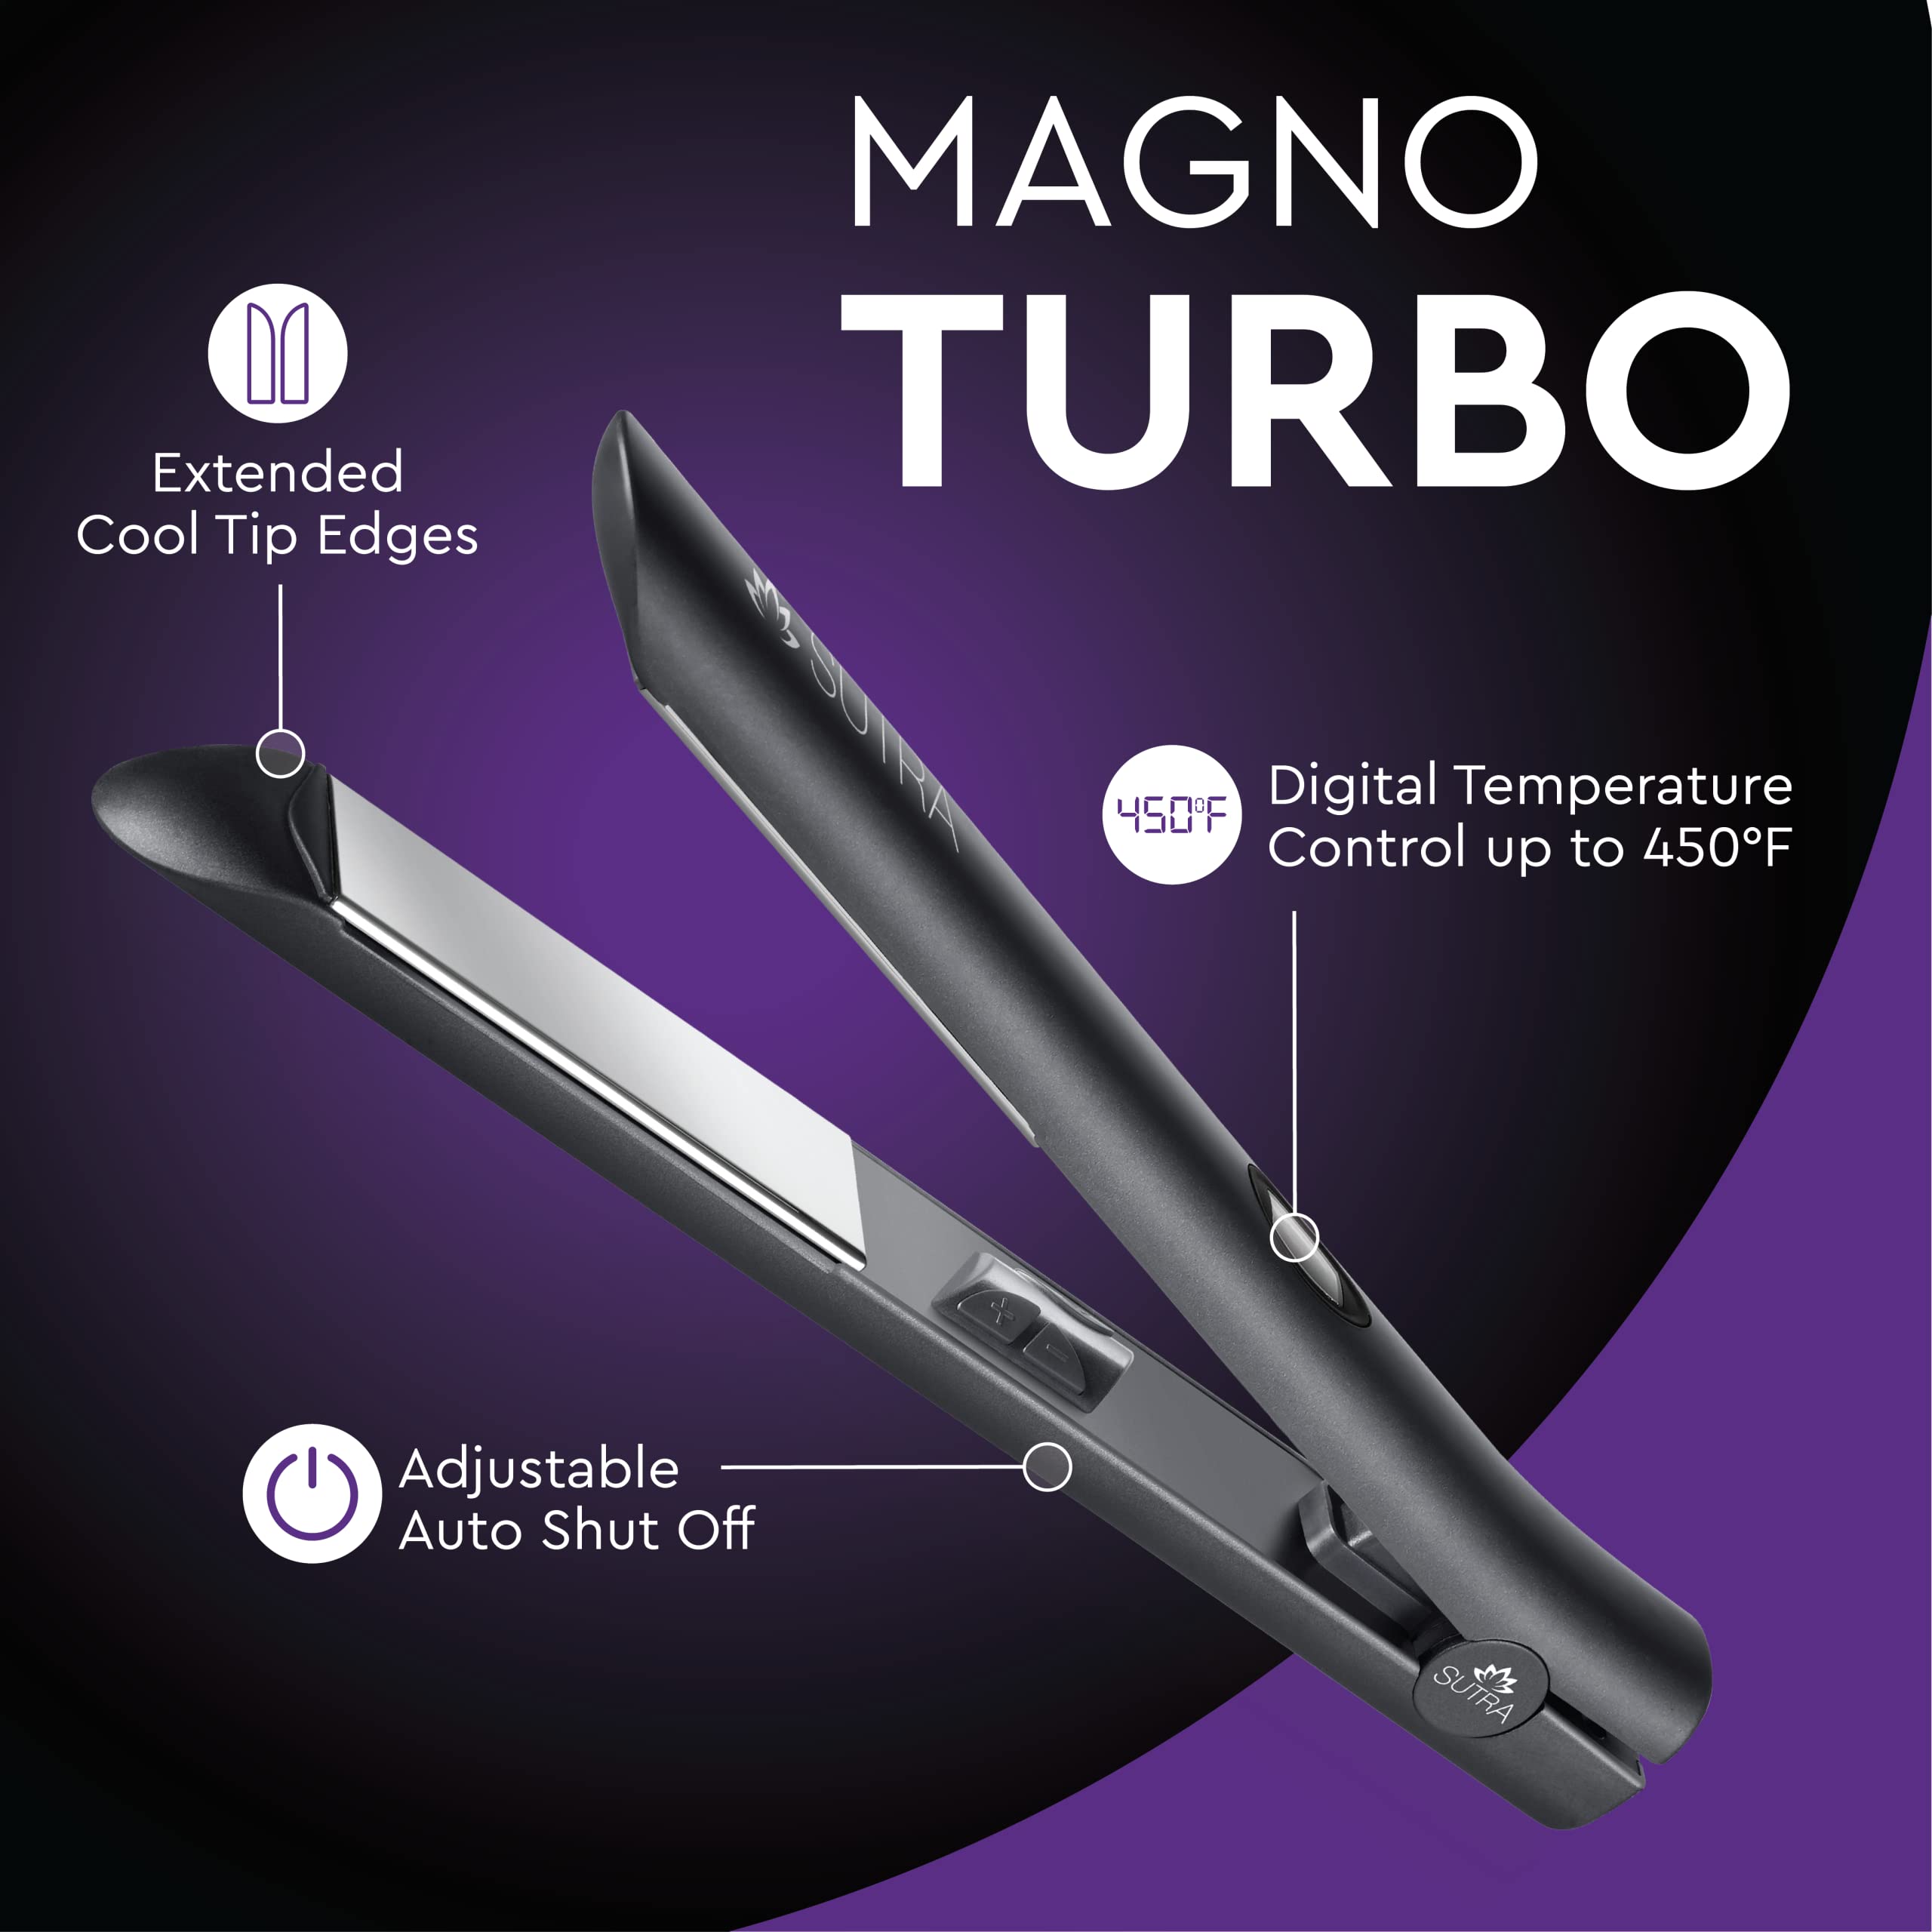 SUTRA Professional Magno Turbo Flat Iron Titanium Hair Straightener, Rapid Heat up to 450°F LCD Display, Dual Voltage, Auto Shut Off, 1-inch